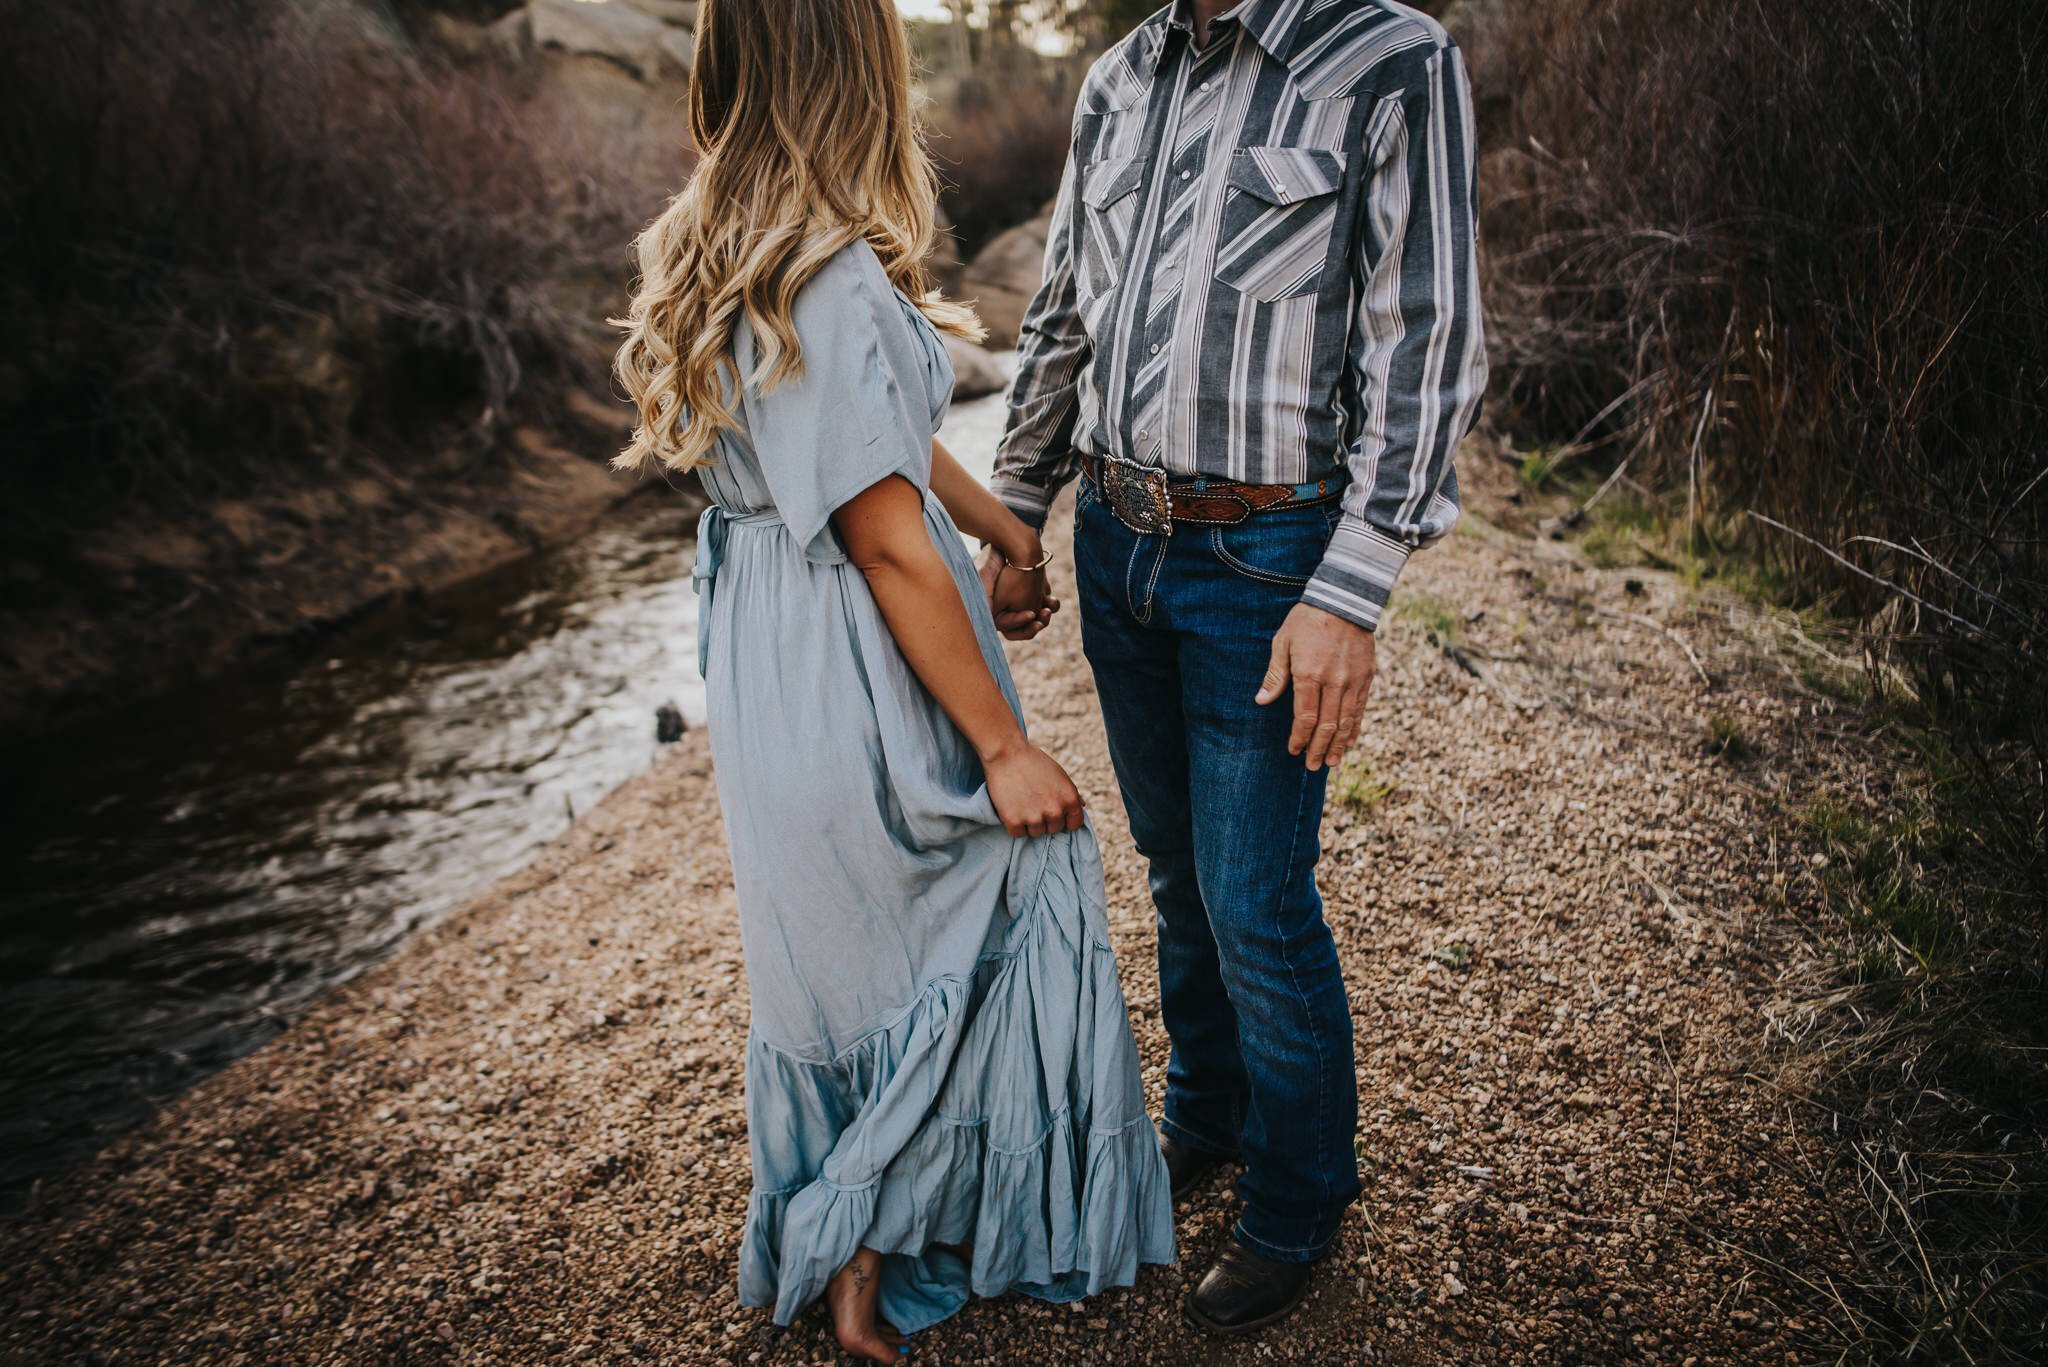 Shelby+and+Brady+Engagement+Session+Cheyenne+Wyoming+Sunset+Water+Fields+Rocks+Nature+Colorado+Photographer+Wild+Prairie+Photography-11-2020.jpeg